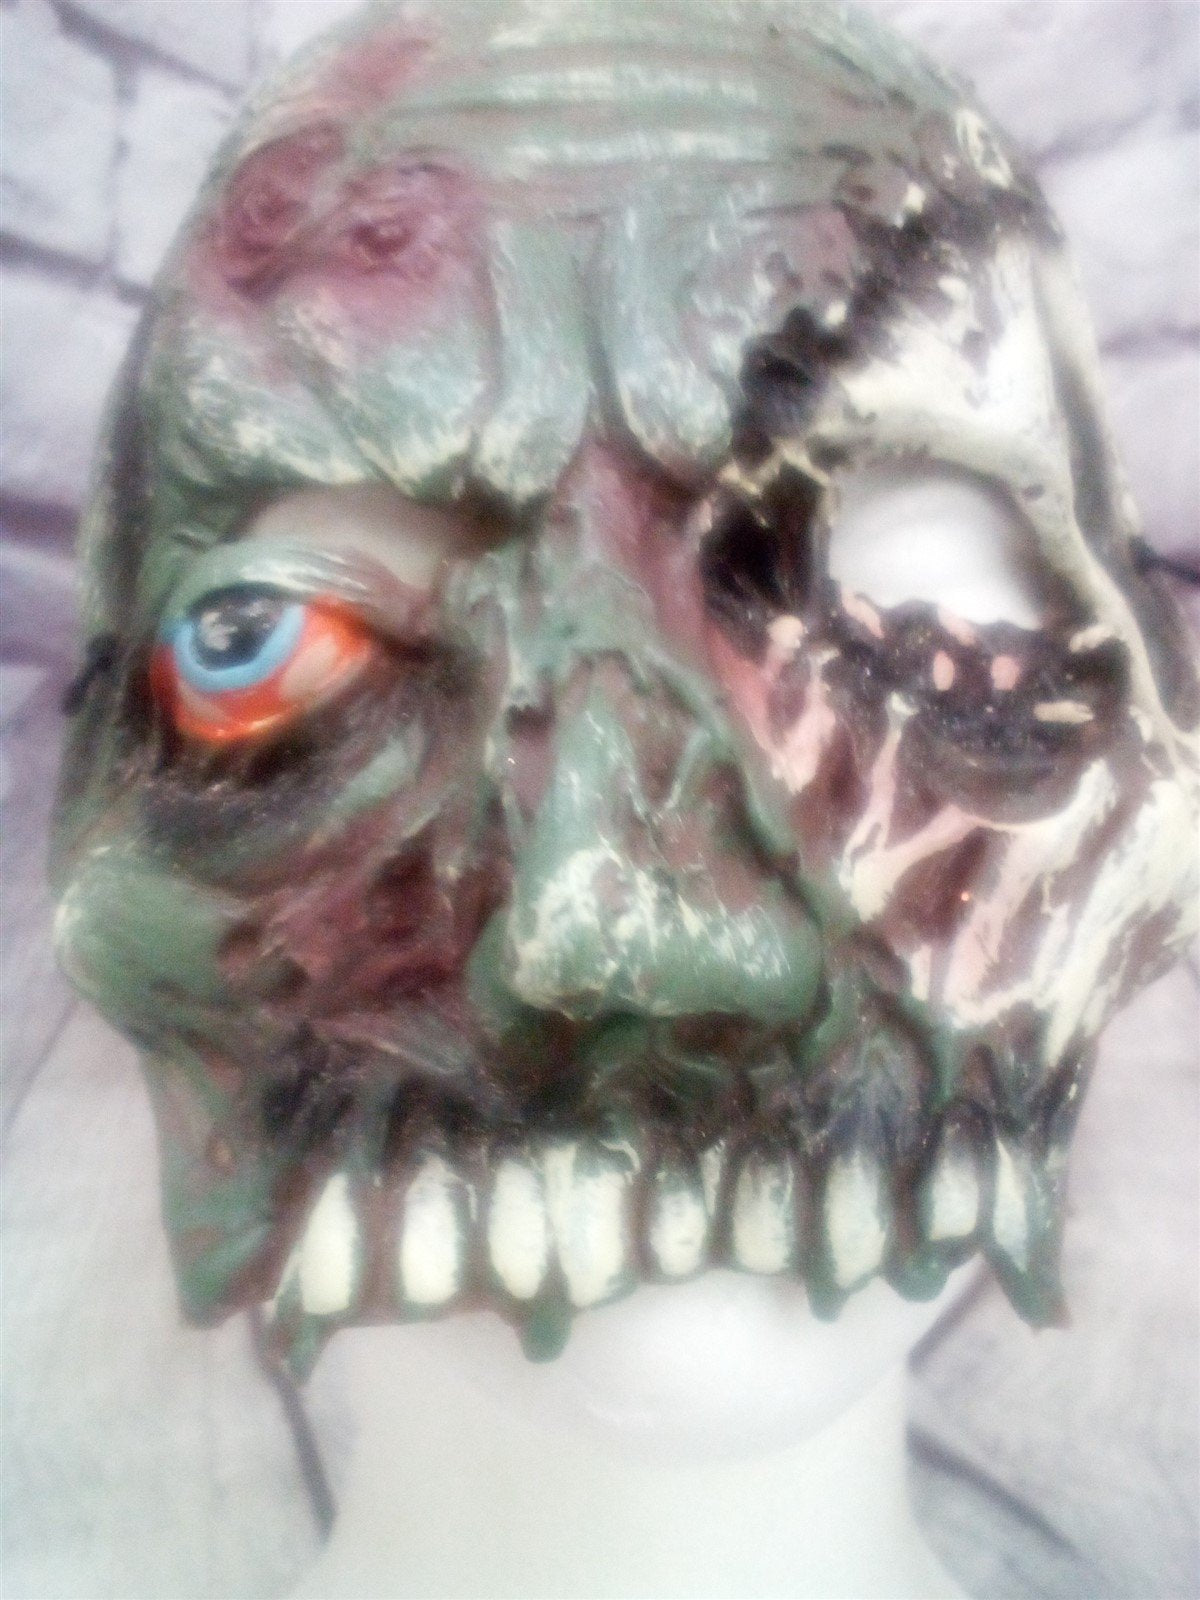 Zombie Walking Dead Vinyl Halloween Face Mask With Melting Eye